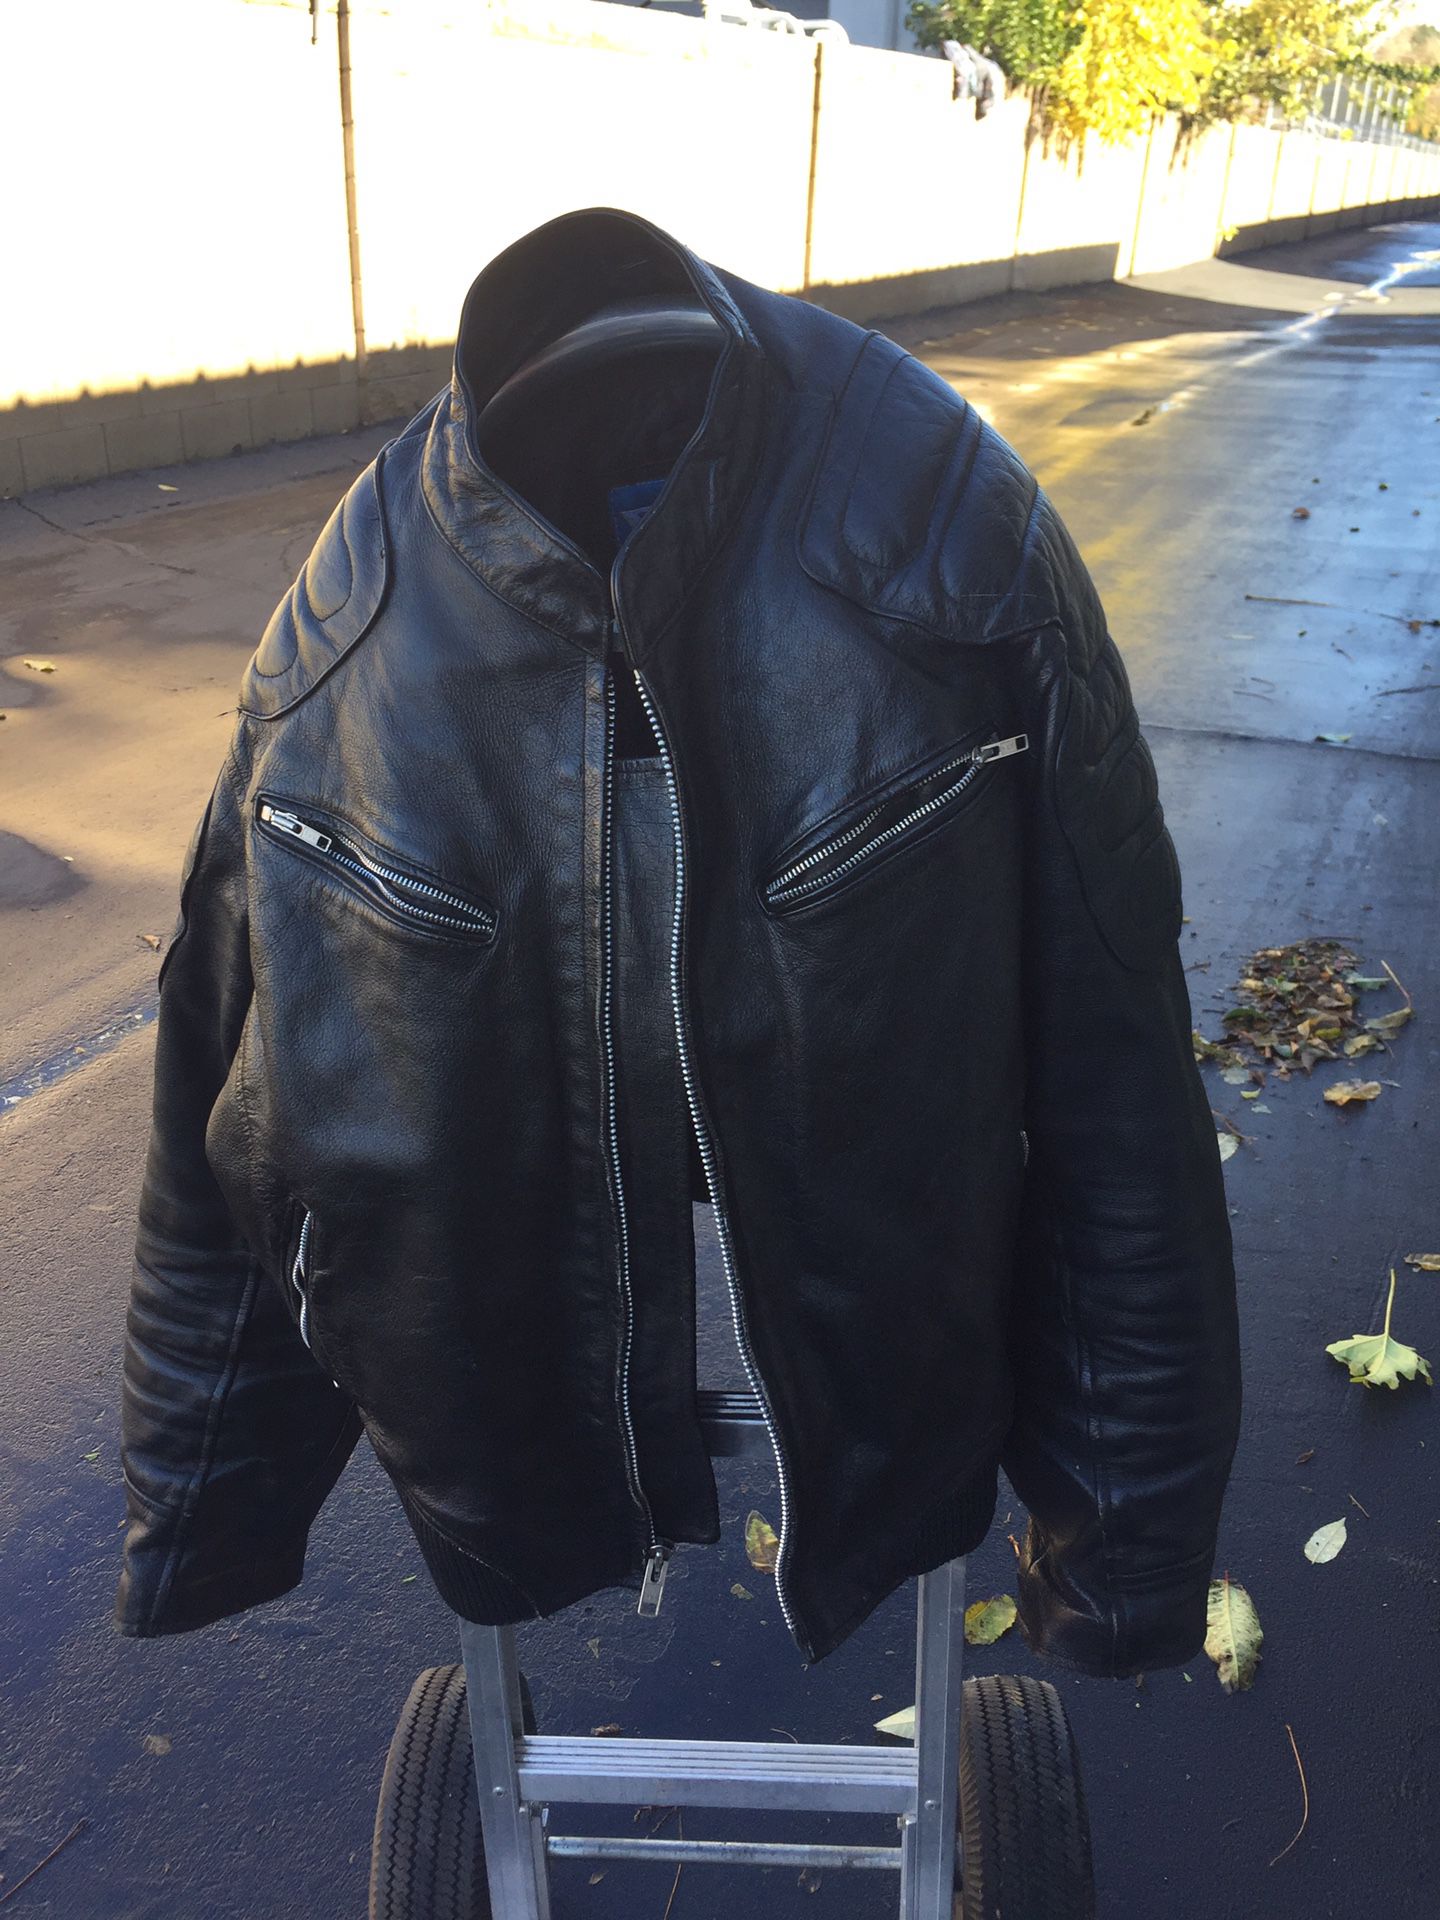 Leather motorcycle jacket $110